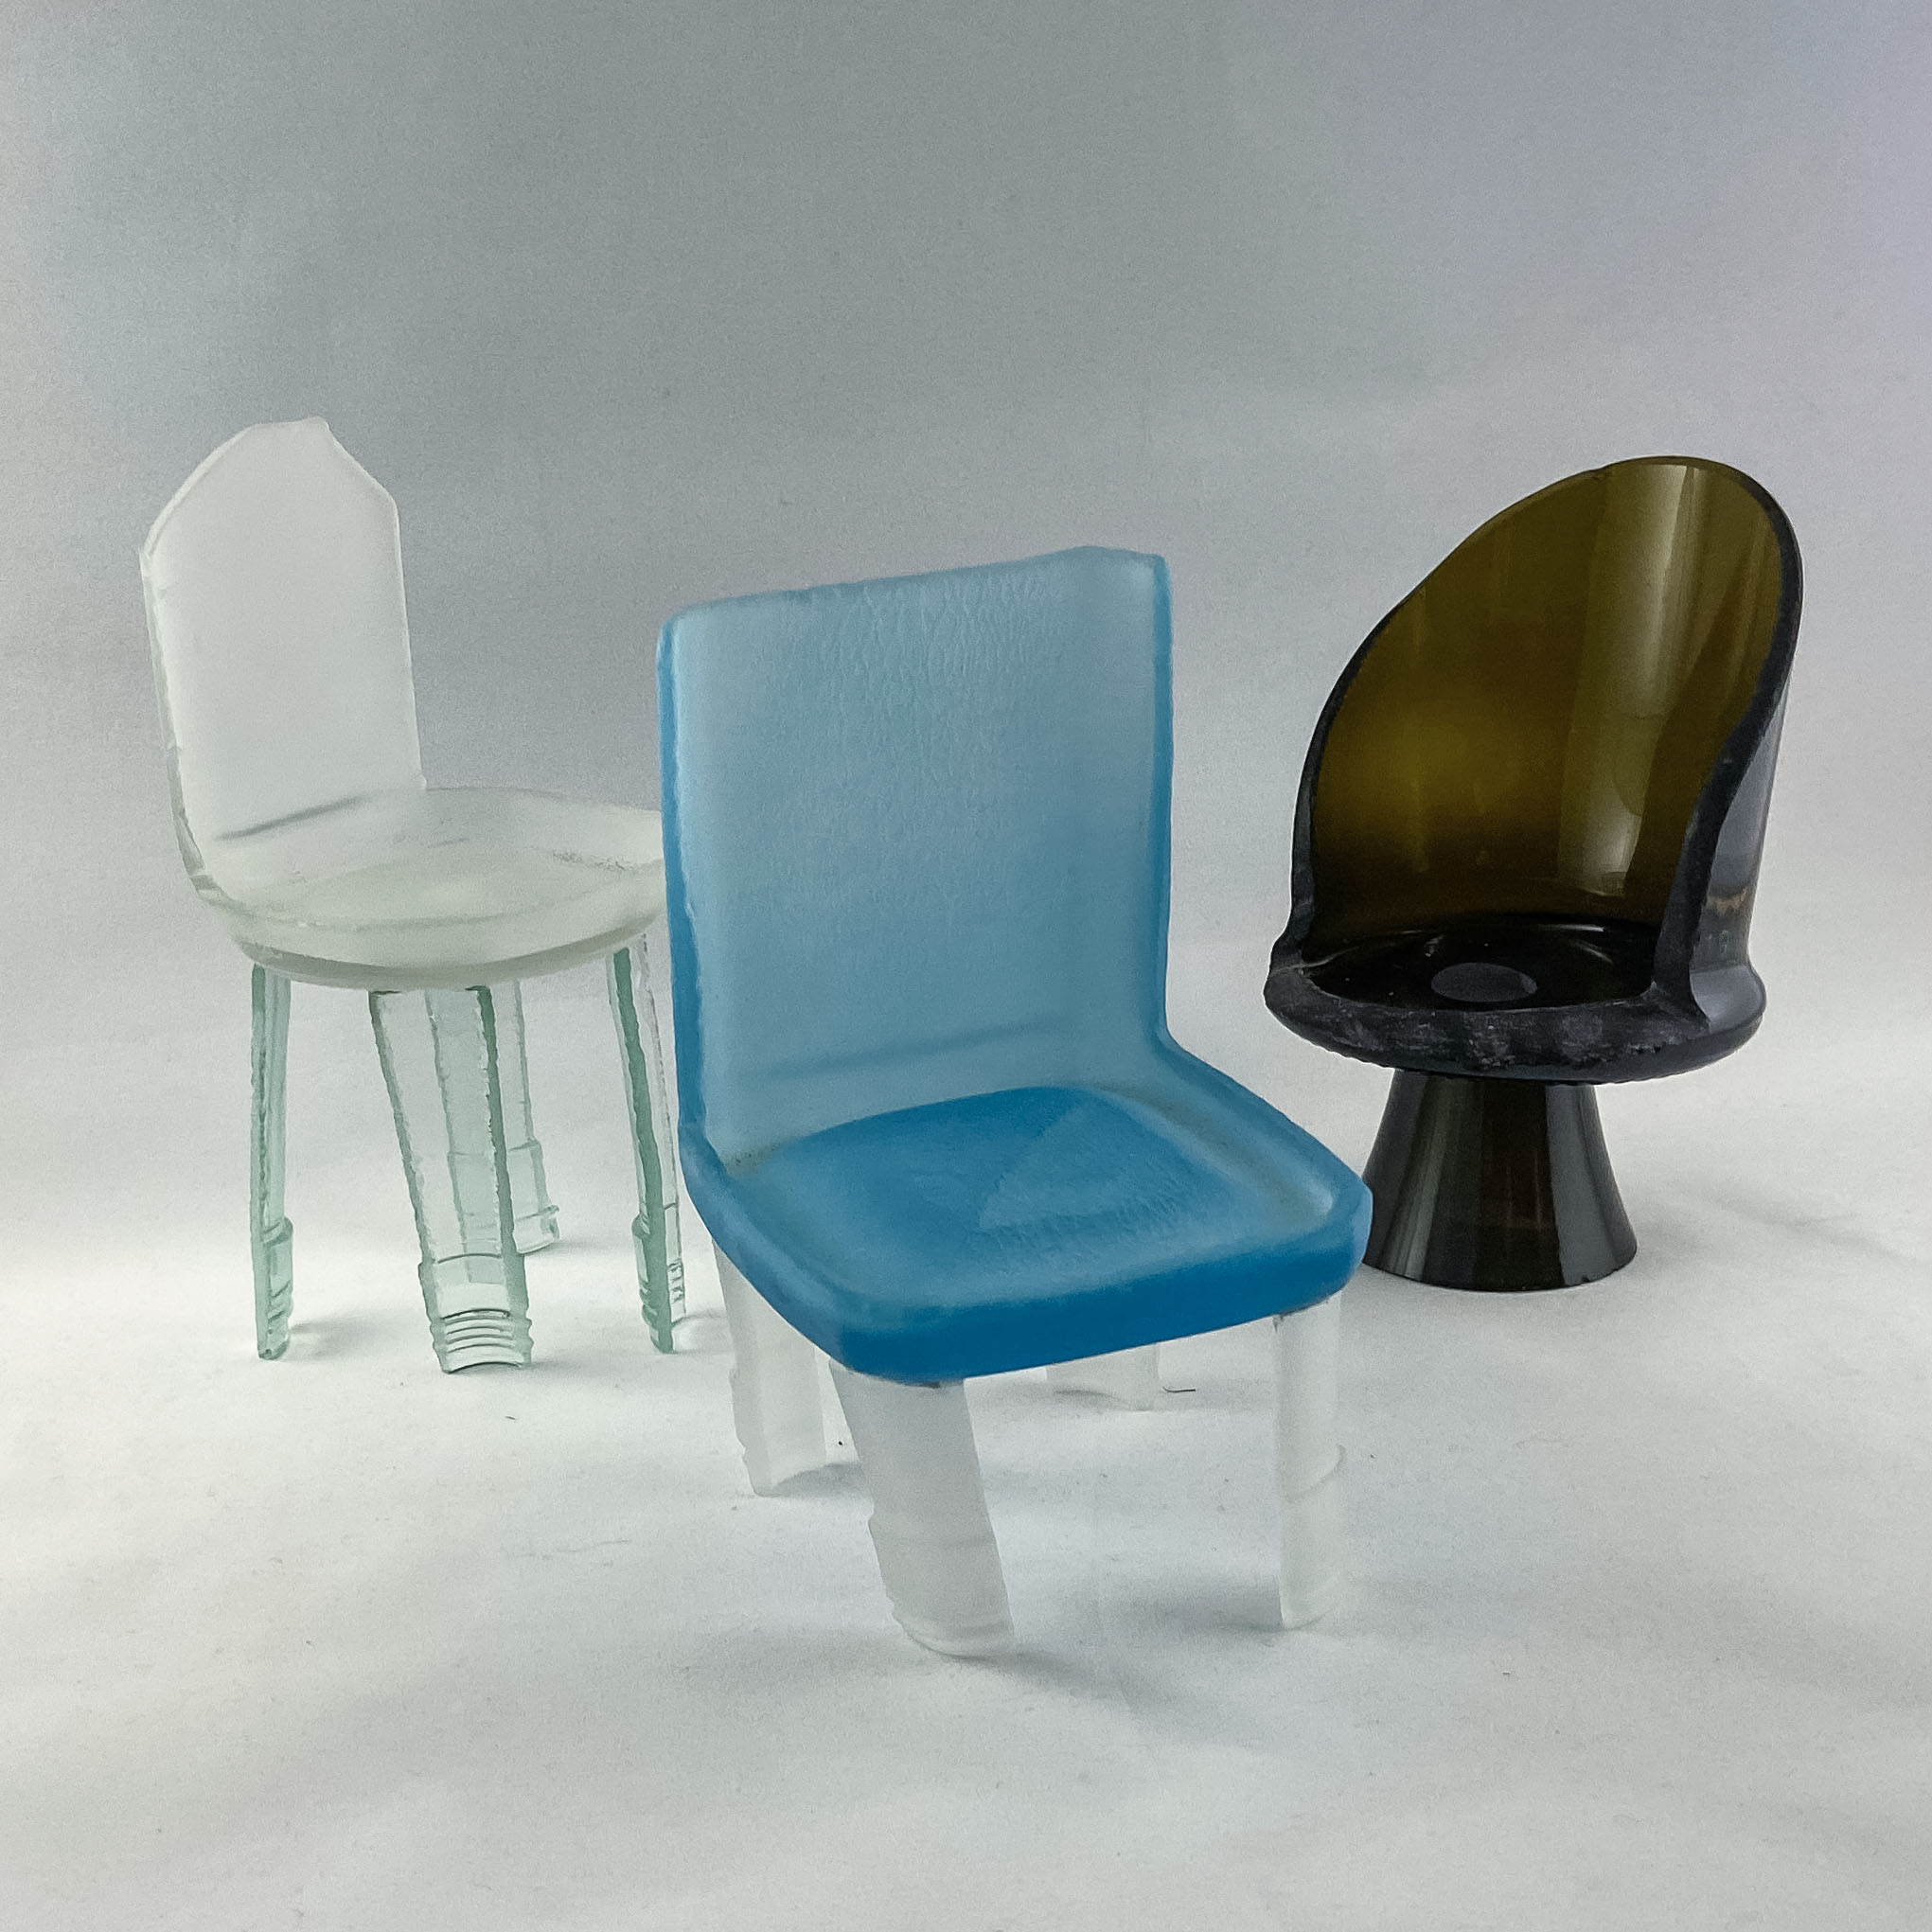 Ru Proportioneel Steken Kleine stoeltjes van stoeltjes project | Ala Patricia